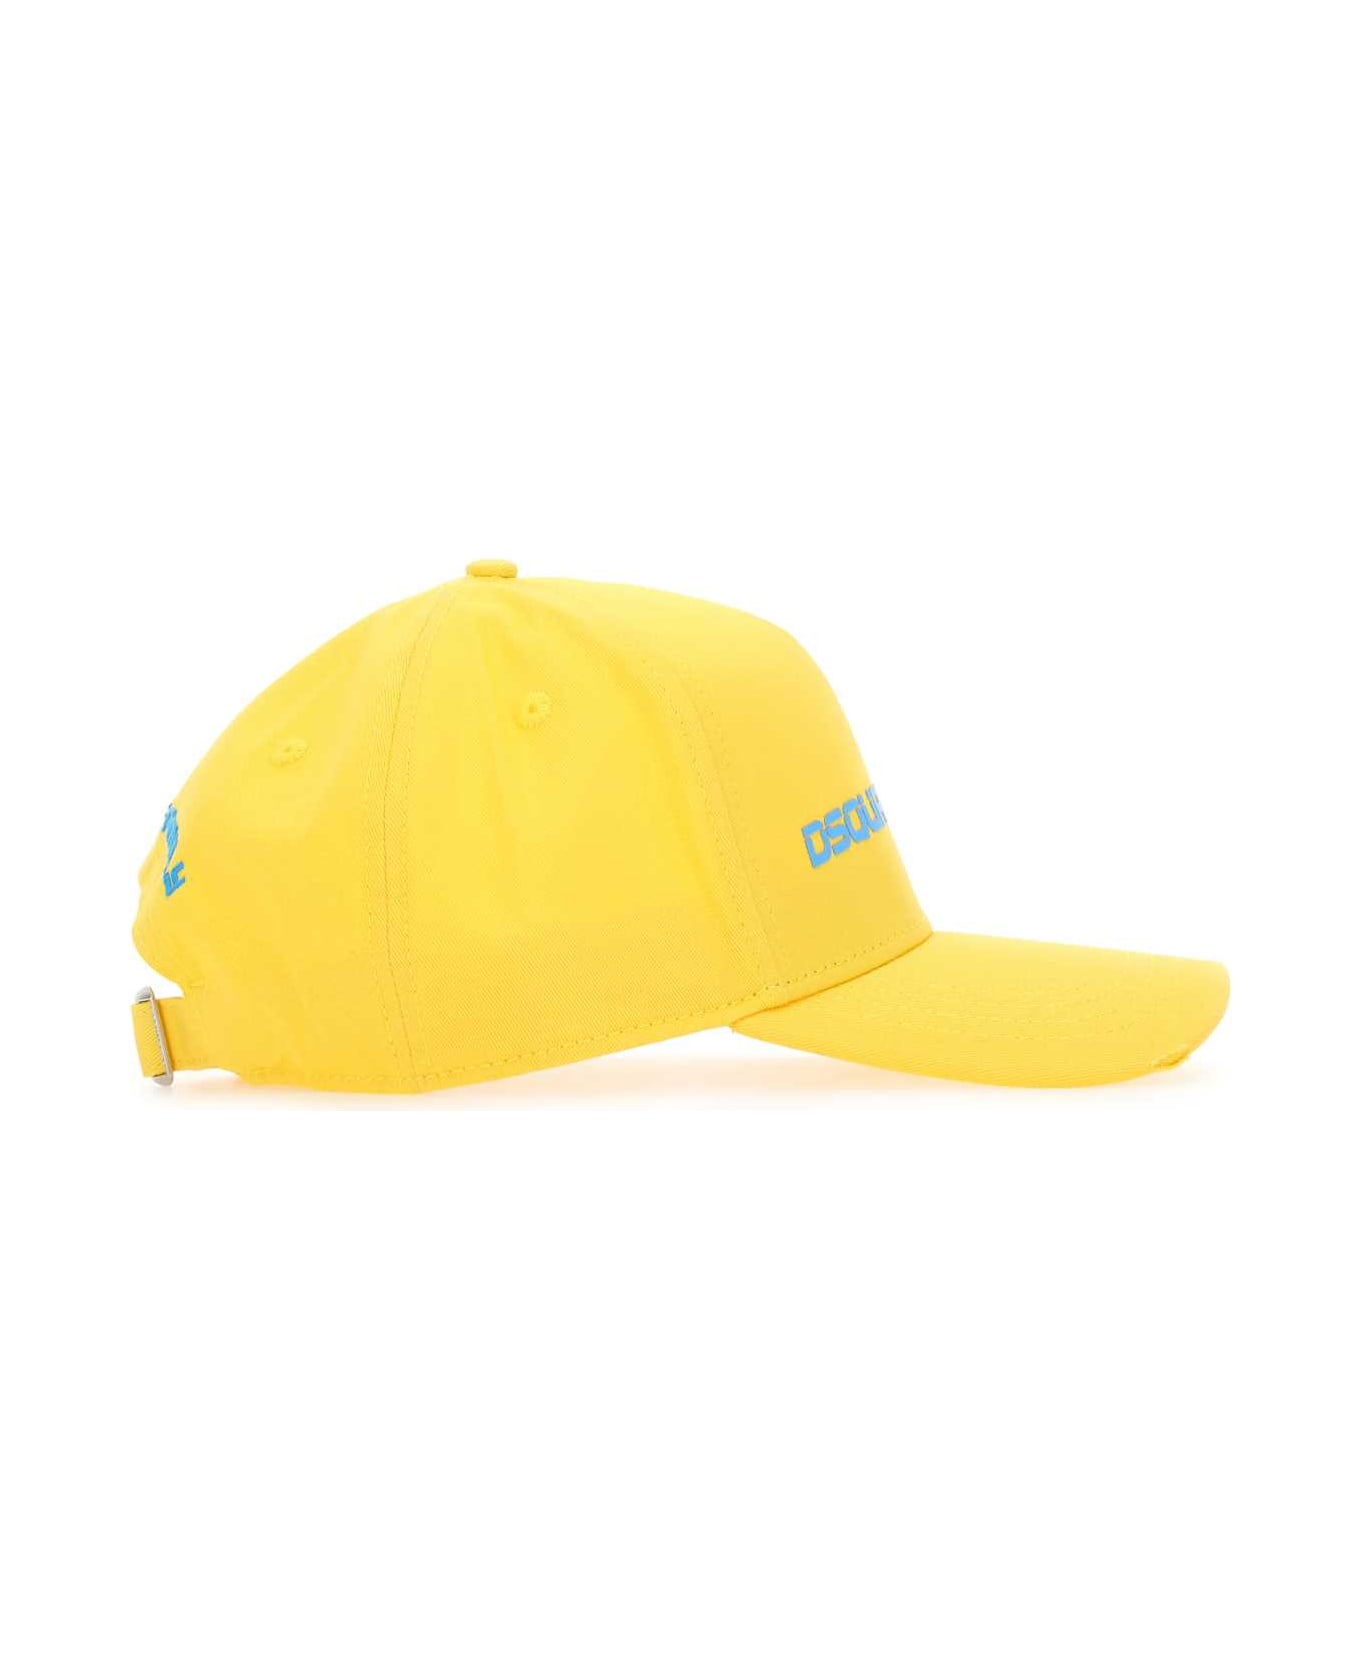 Dsquared2 Yellow Cotton Baseball Cap - YELLOW